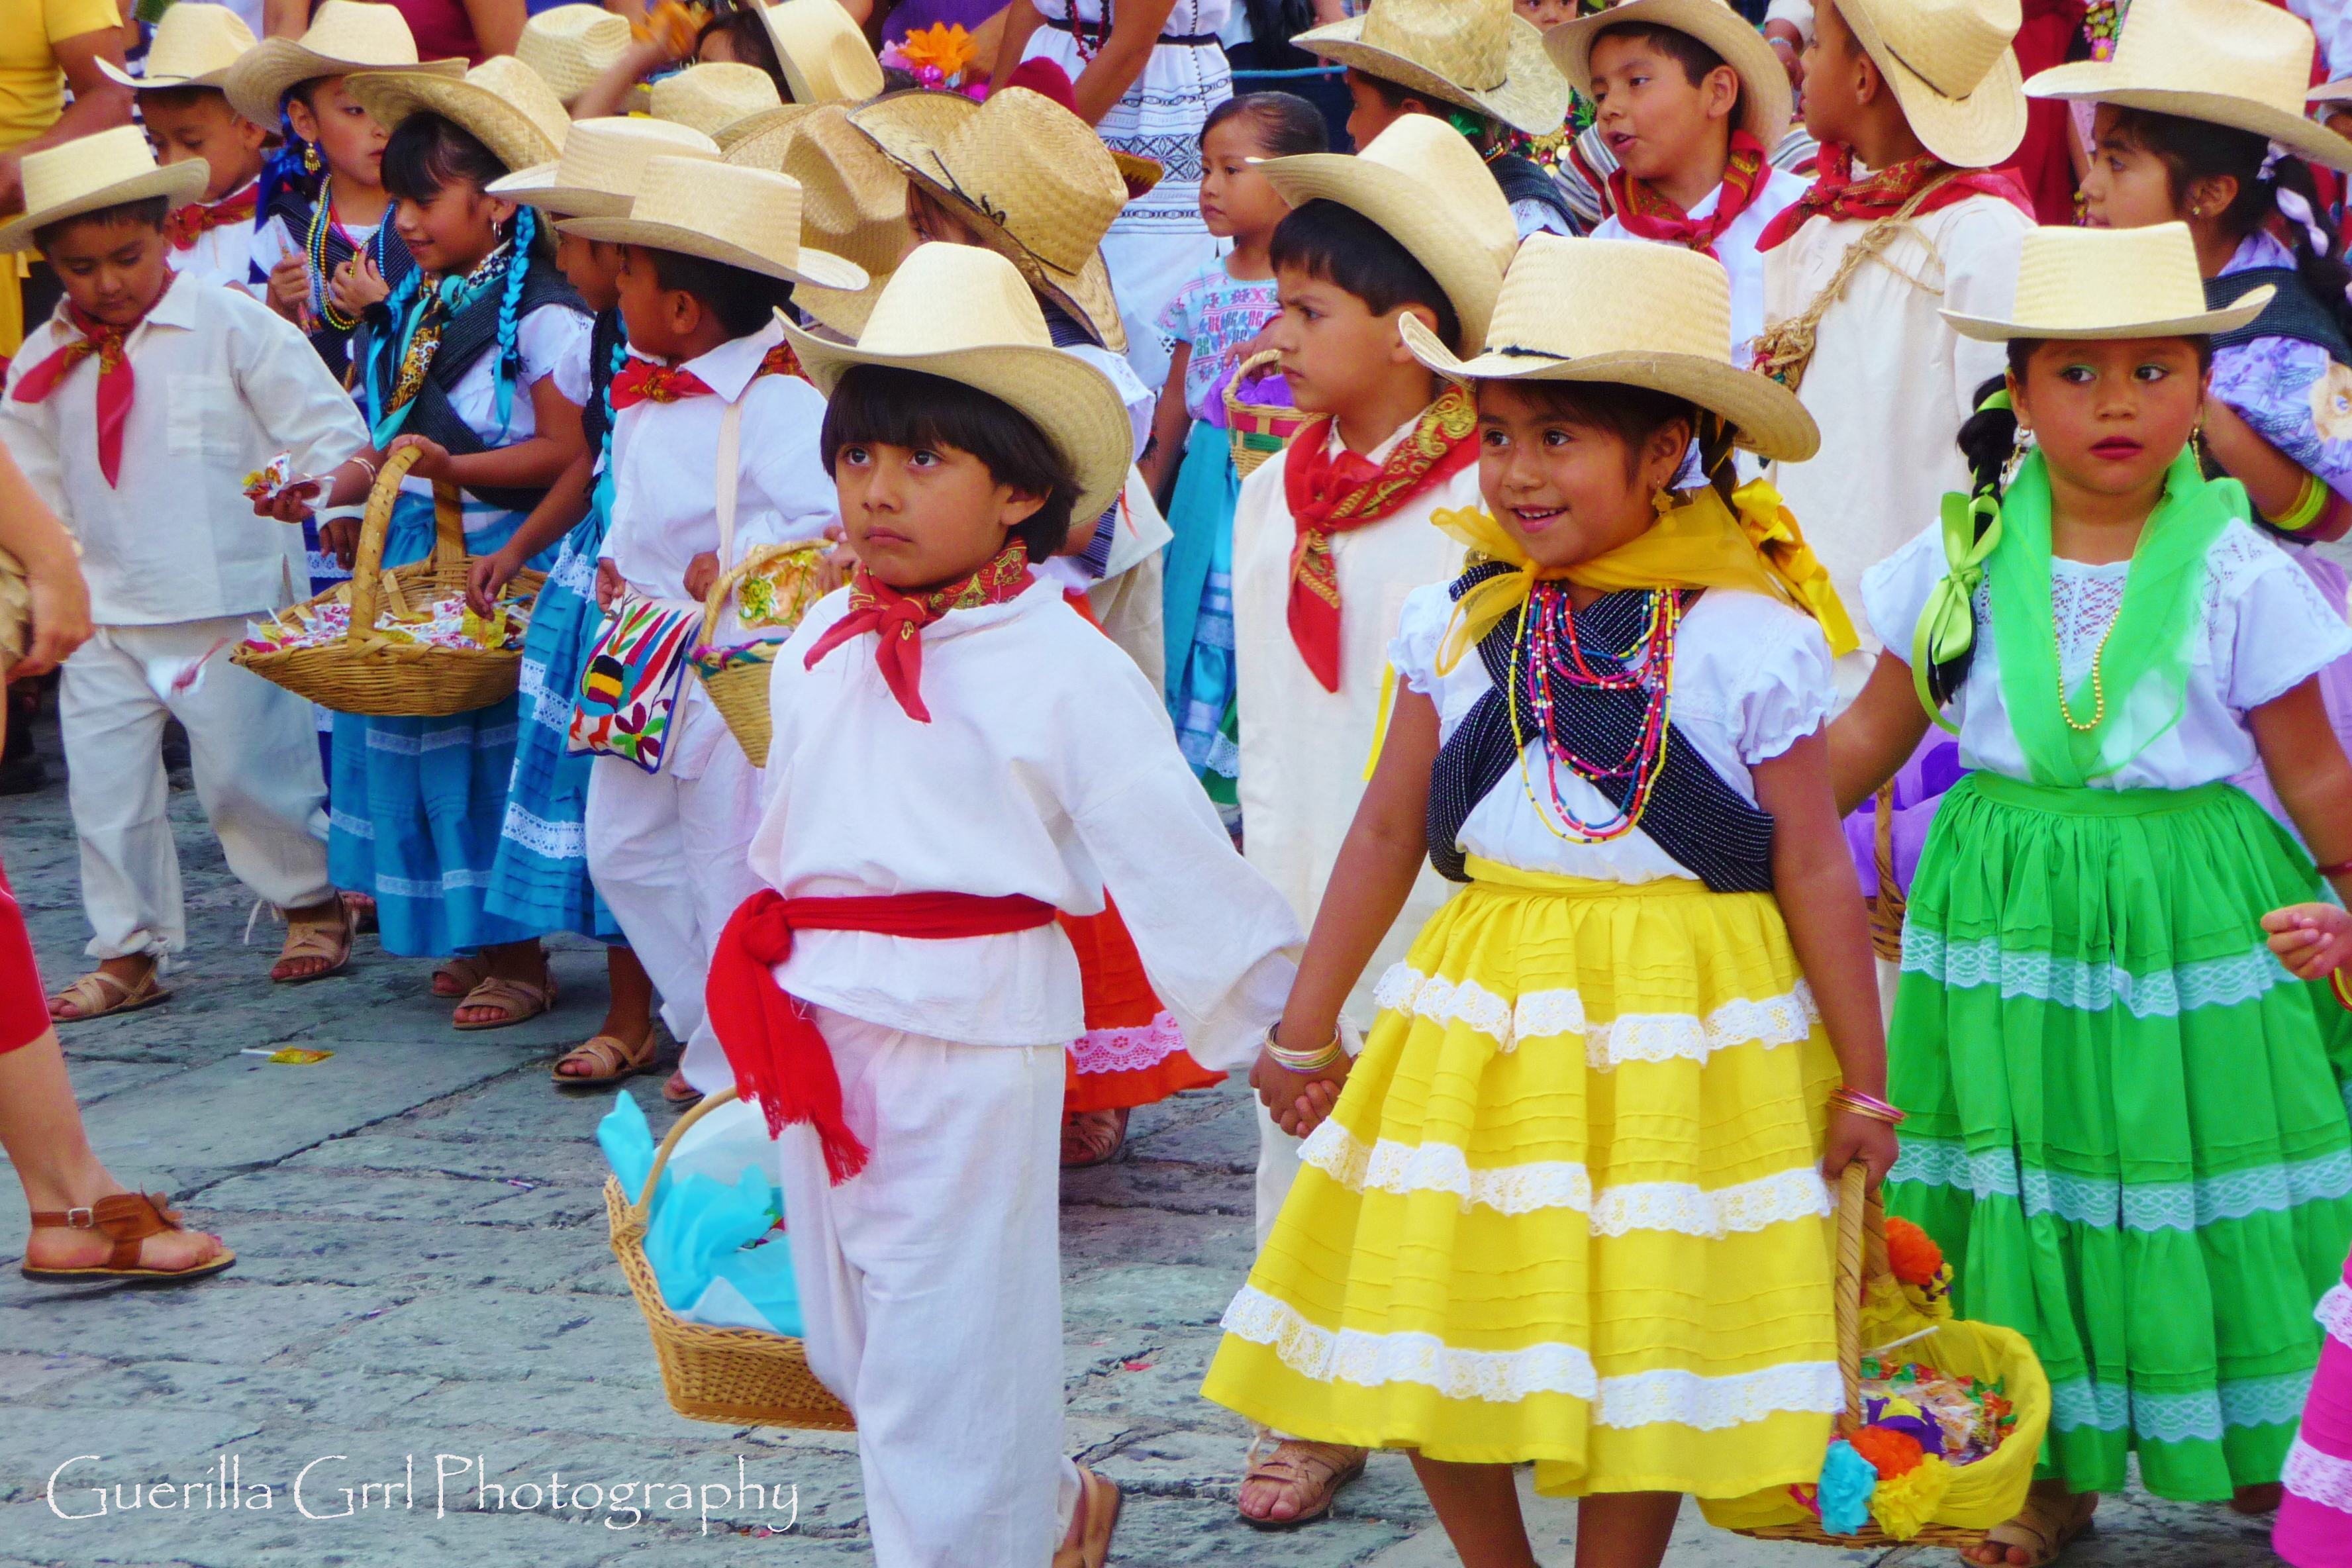 Народ мексики 5 букв. Мексиканцы народы Мексики. Мексиканцы монголоиды. Дети Мексиканцы. Мексиканские дети в национальном.